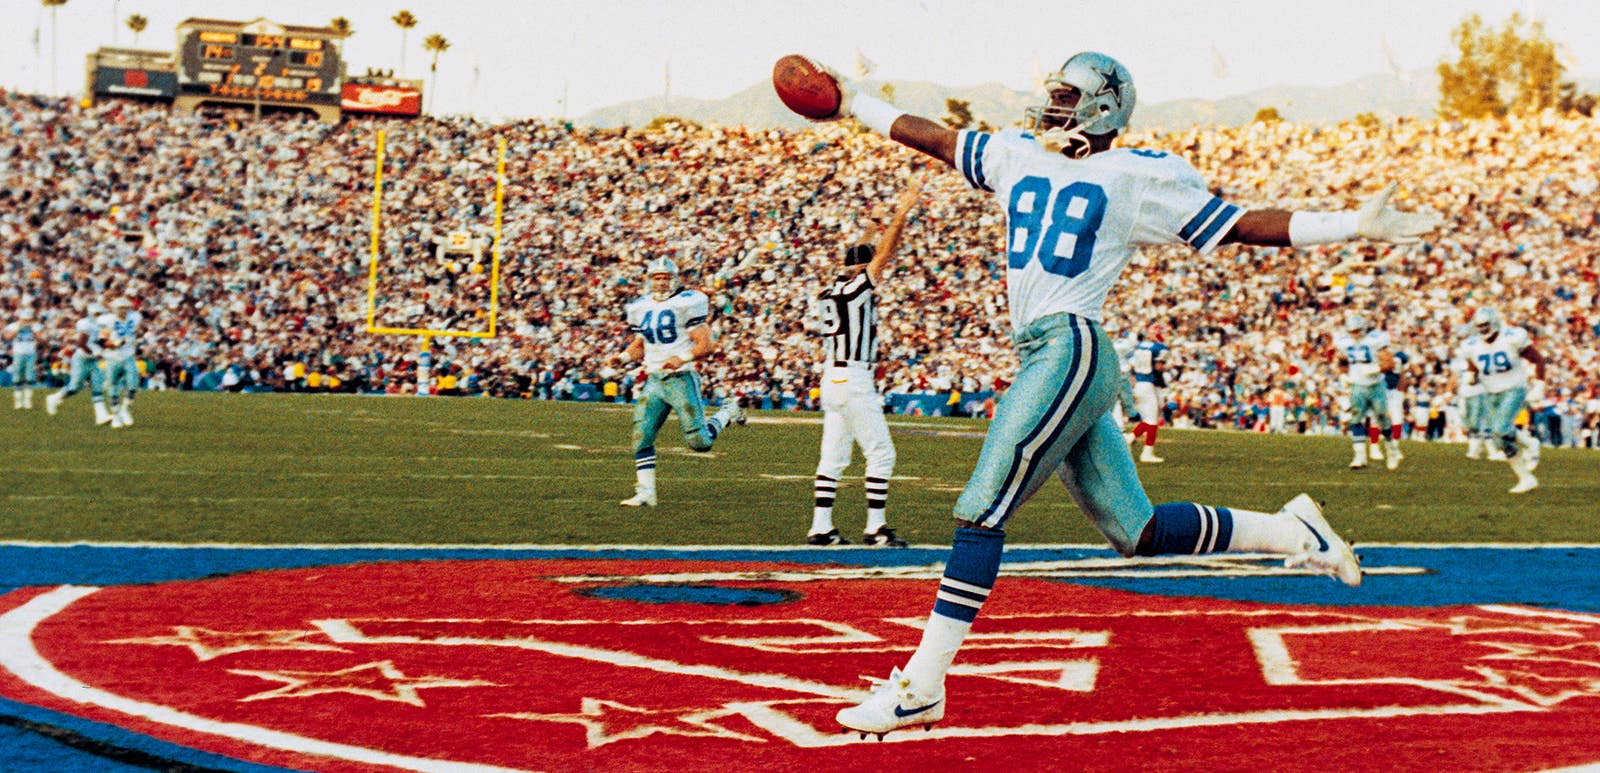 Michael Irvin scores a touchdown in Super Bowl XXVII at Rose Bowl Stadium